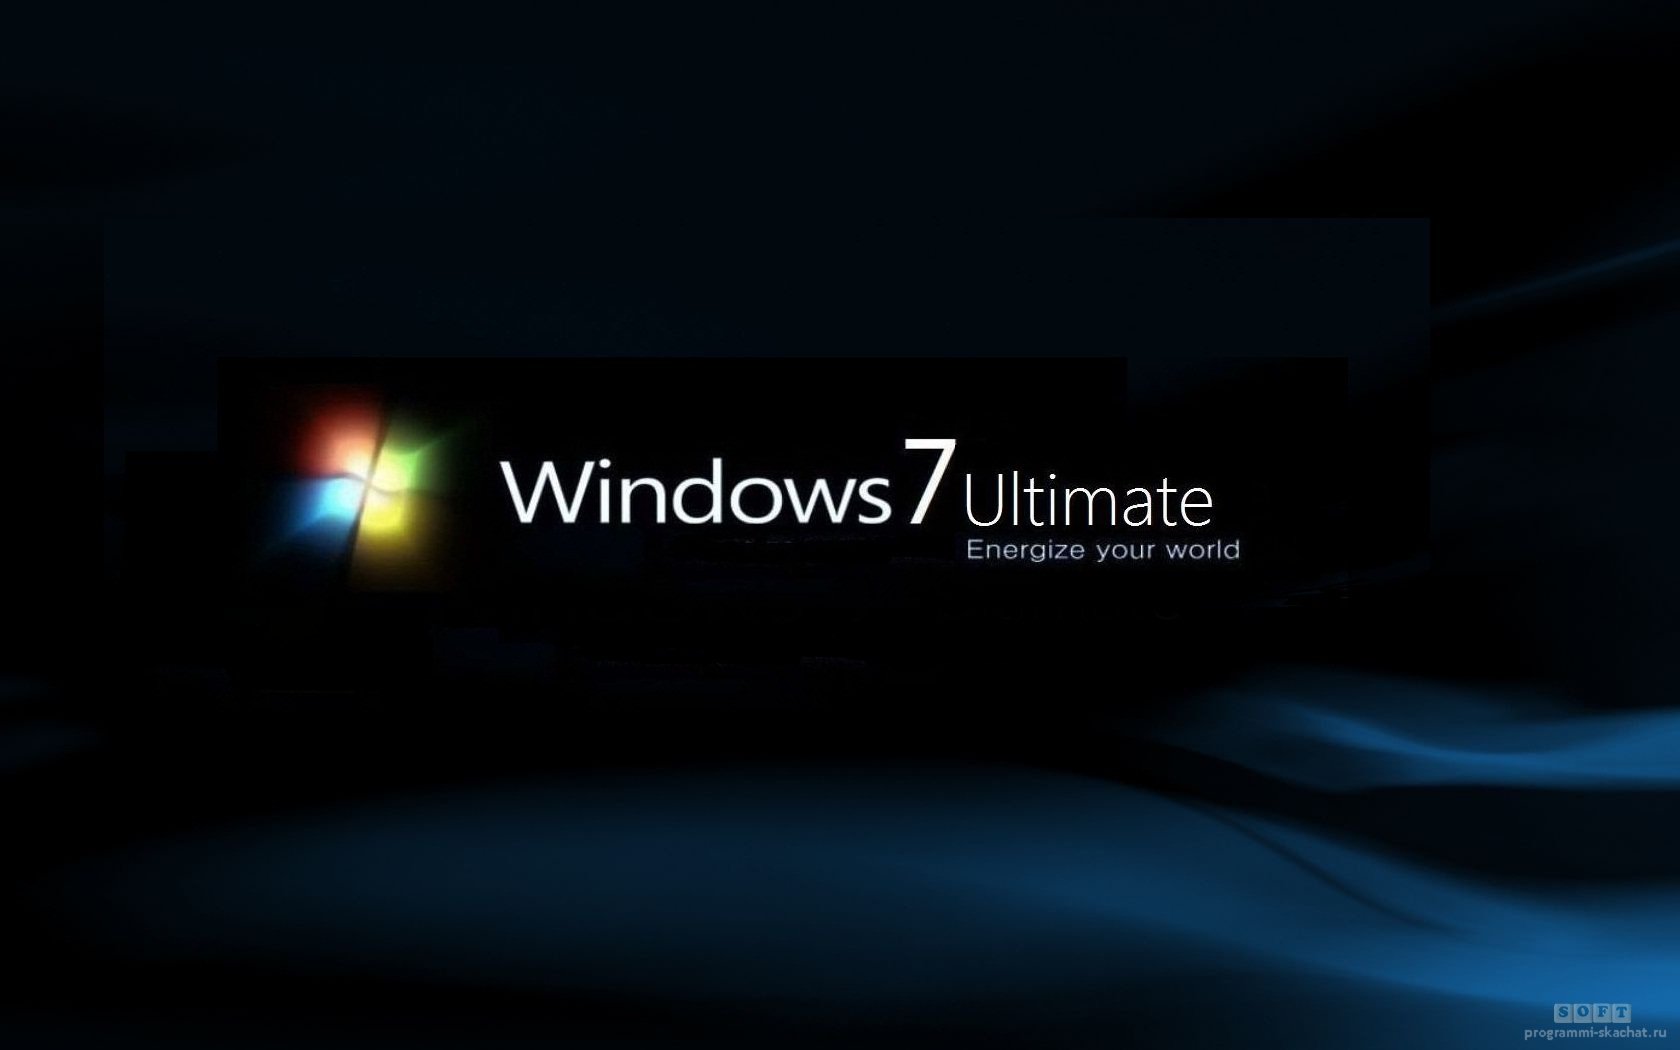 Windows 7 Ultimate long logo